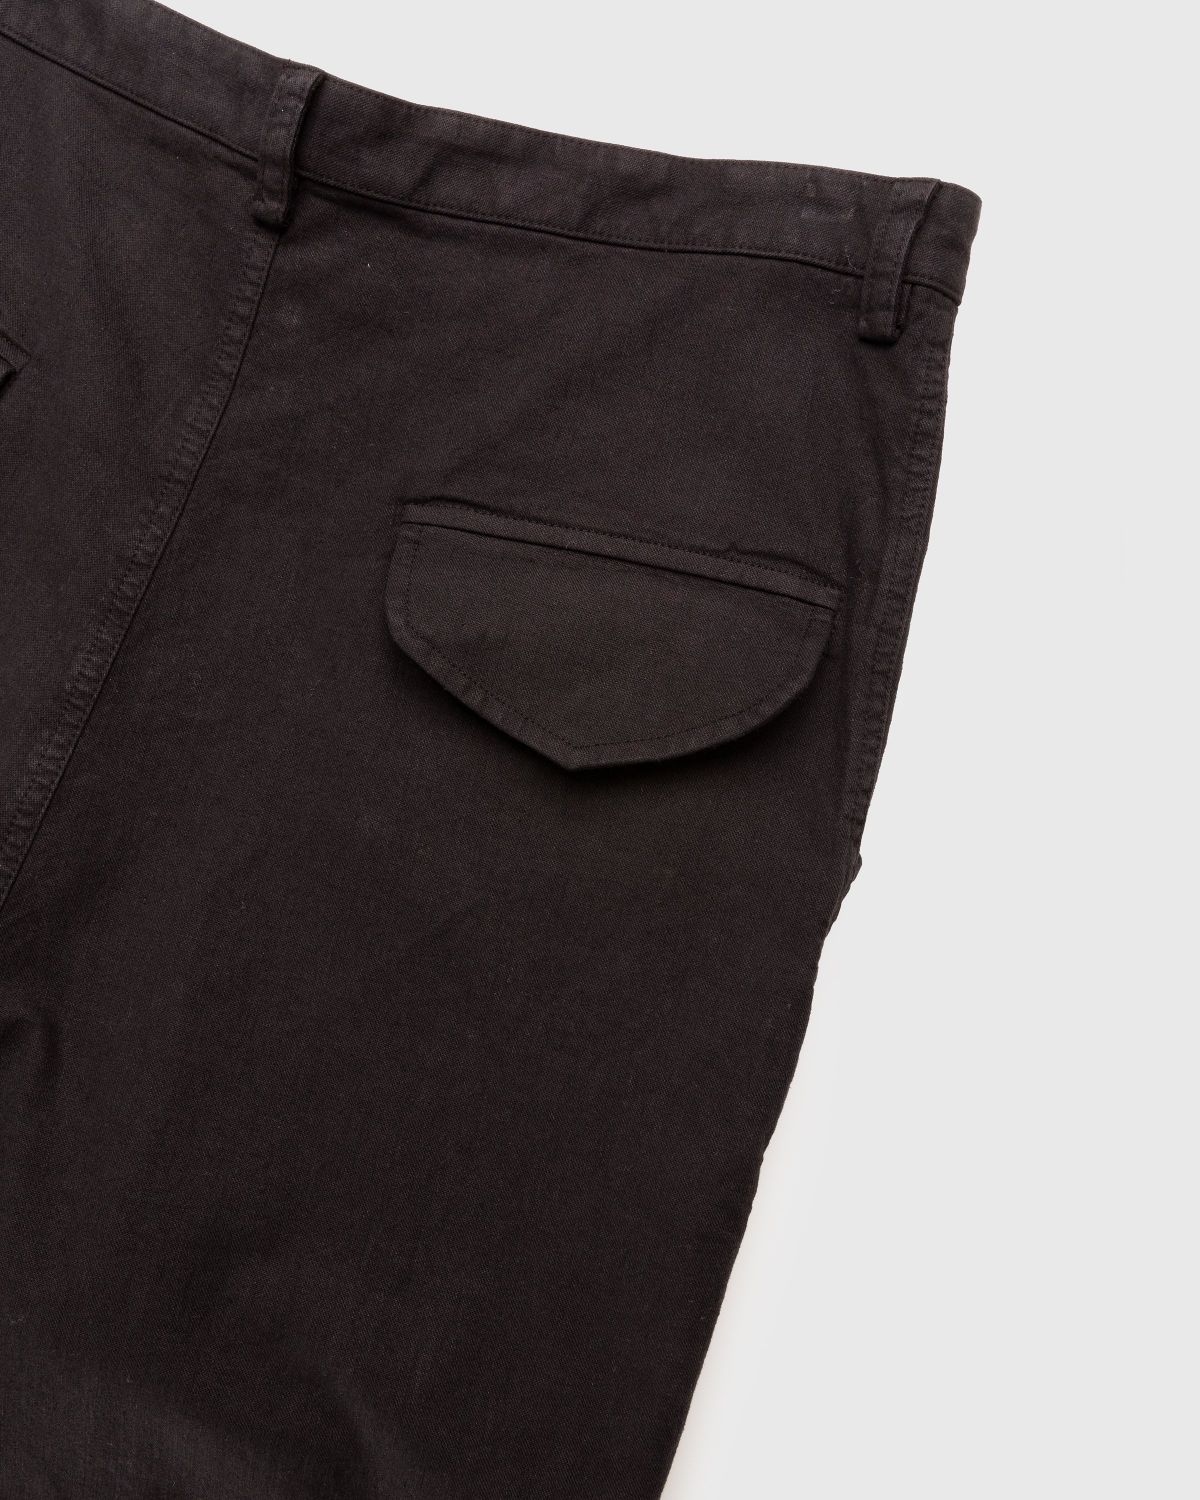 Winnie New York – Linen Cargo Pants Black - Pants - Black - Image 3